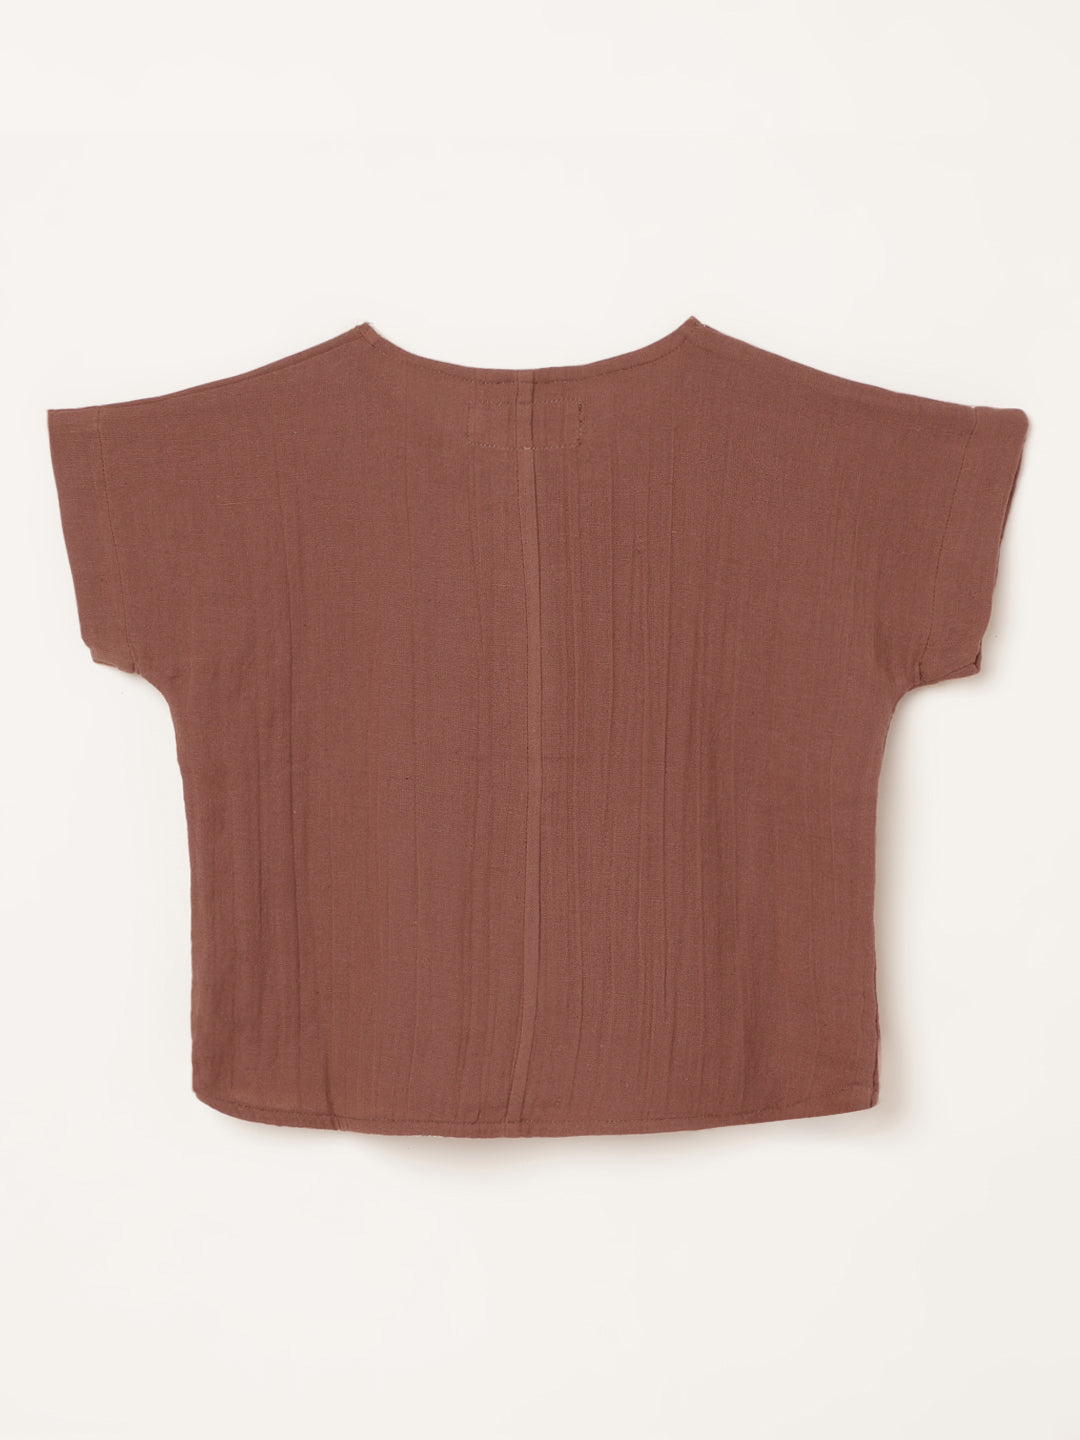 Boys Cotton Rust Brown Shirt | 1 Yr to 8 Yrs -Back